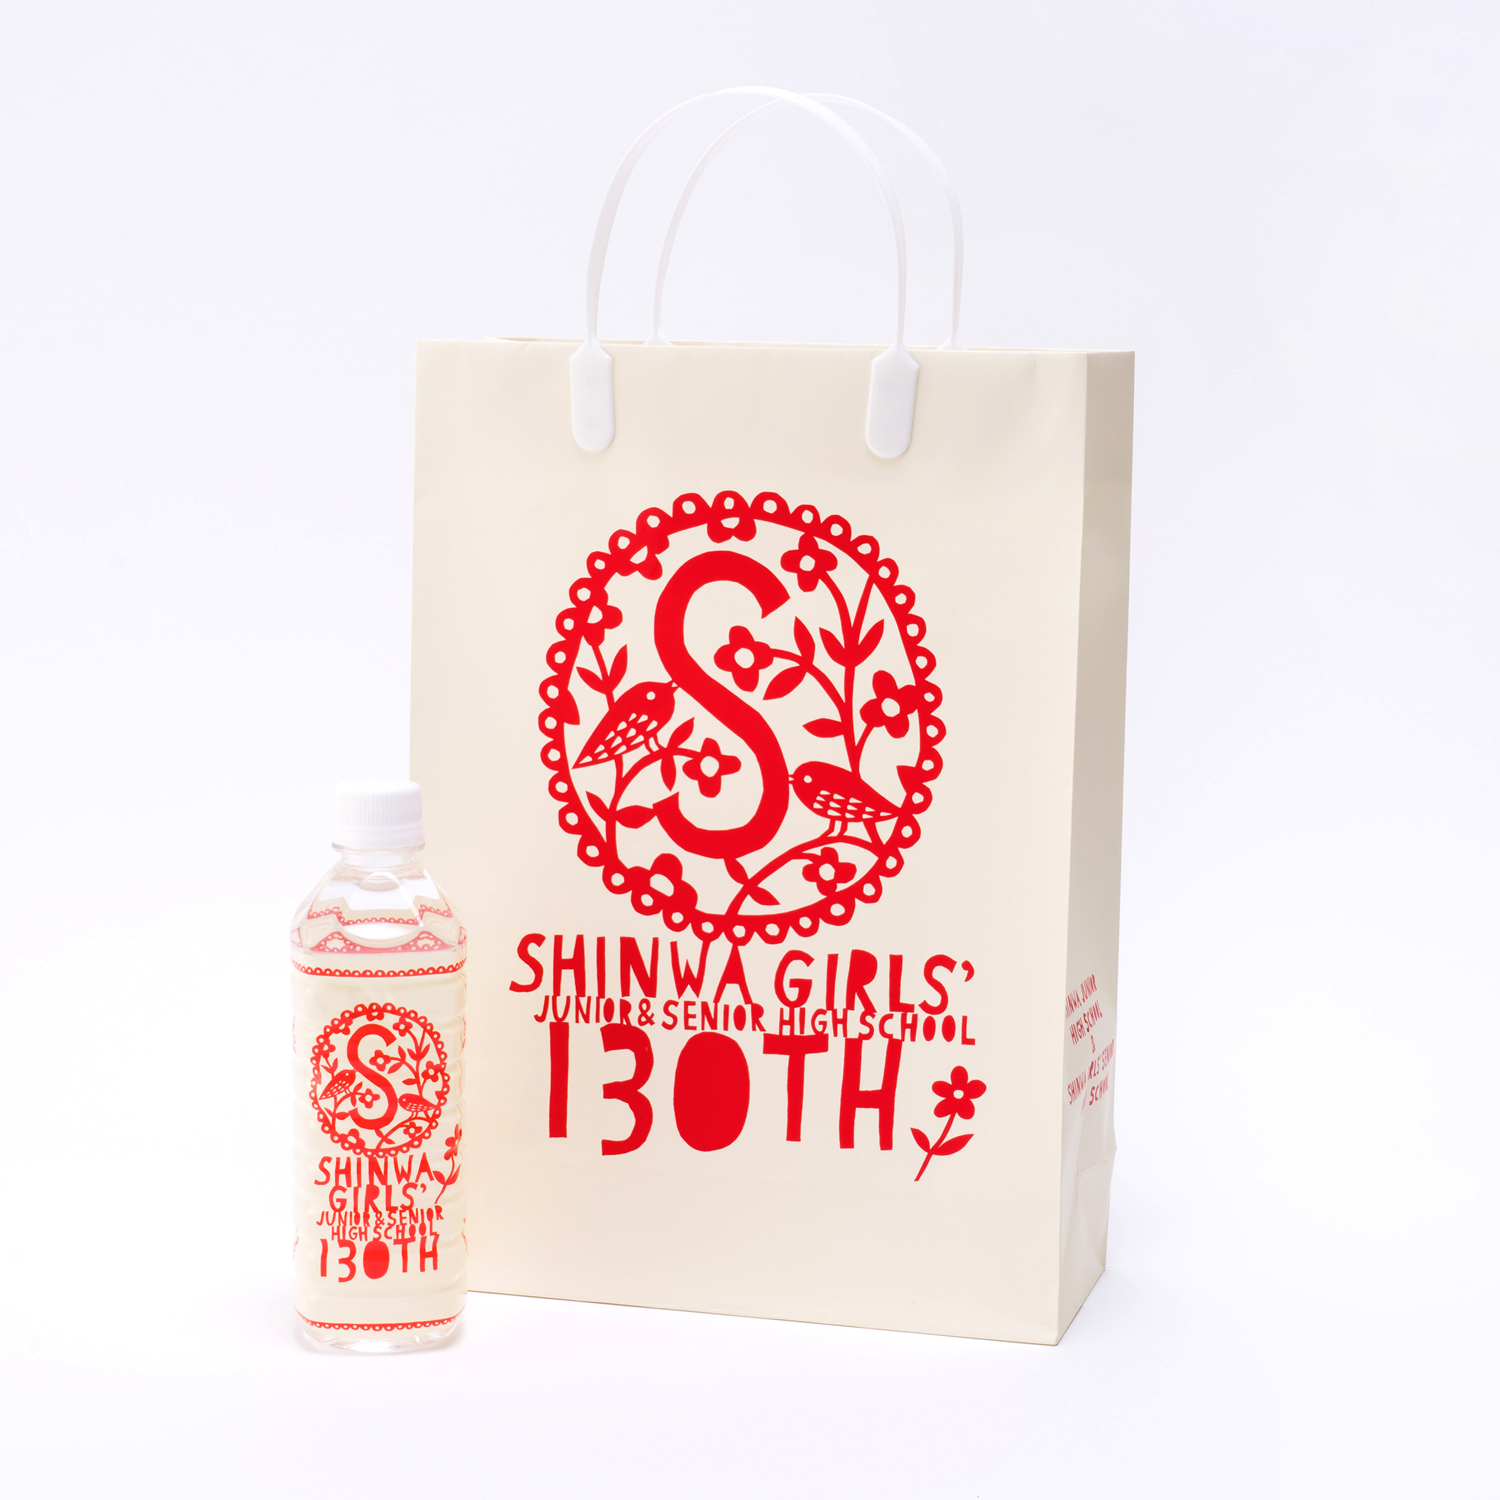 SHINWA GIRLS’ JUNIOR & SENIOR HIGH SCHOOLのイメージ